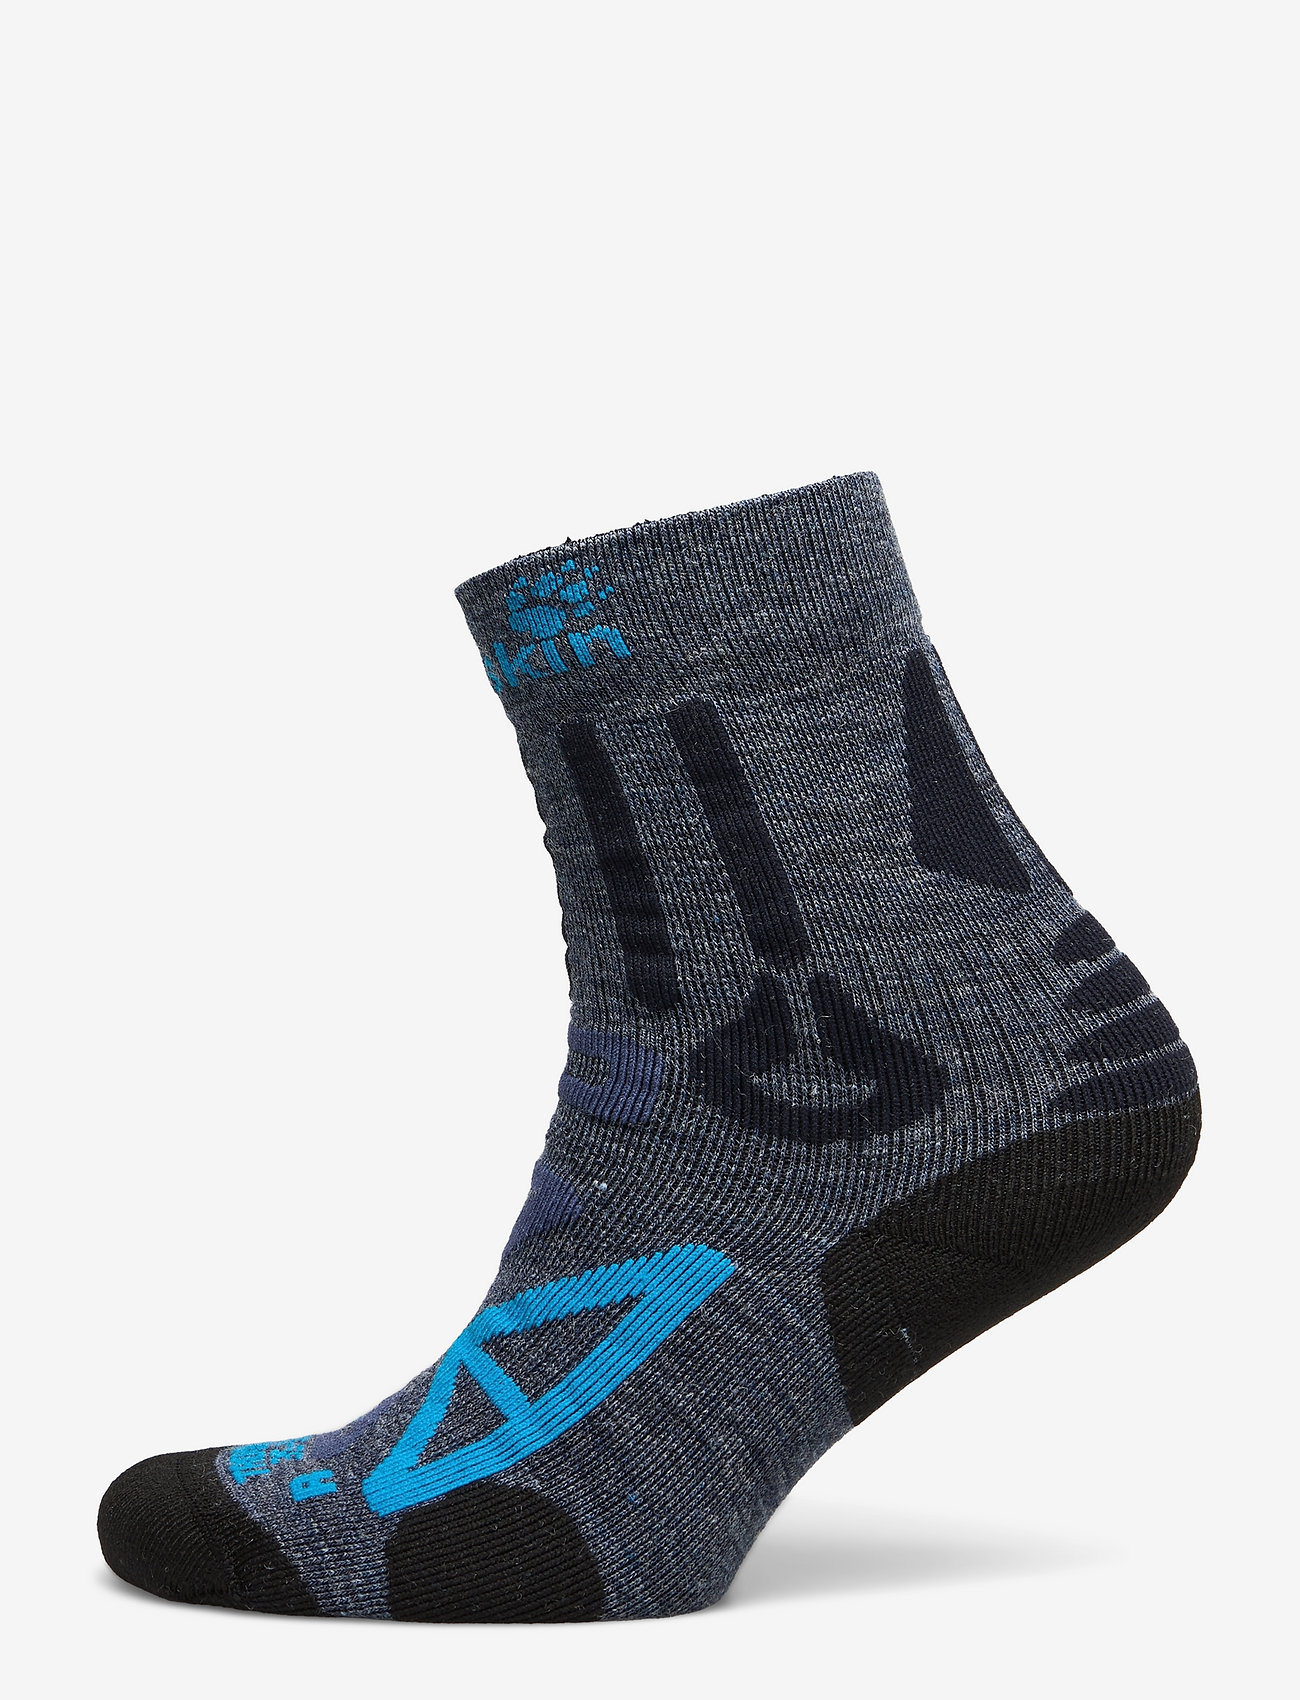 HILLY Herren Socken Twin Skin Classic Running Socken